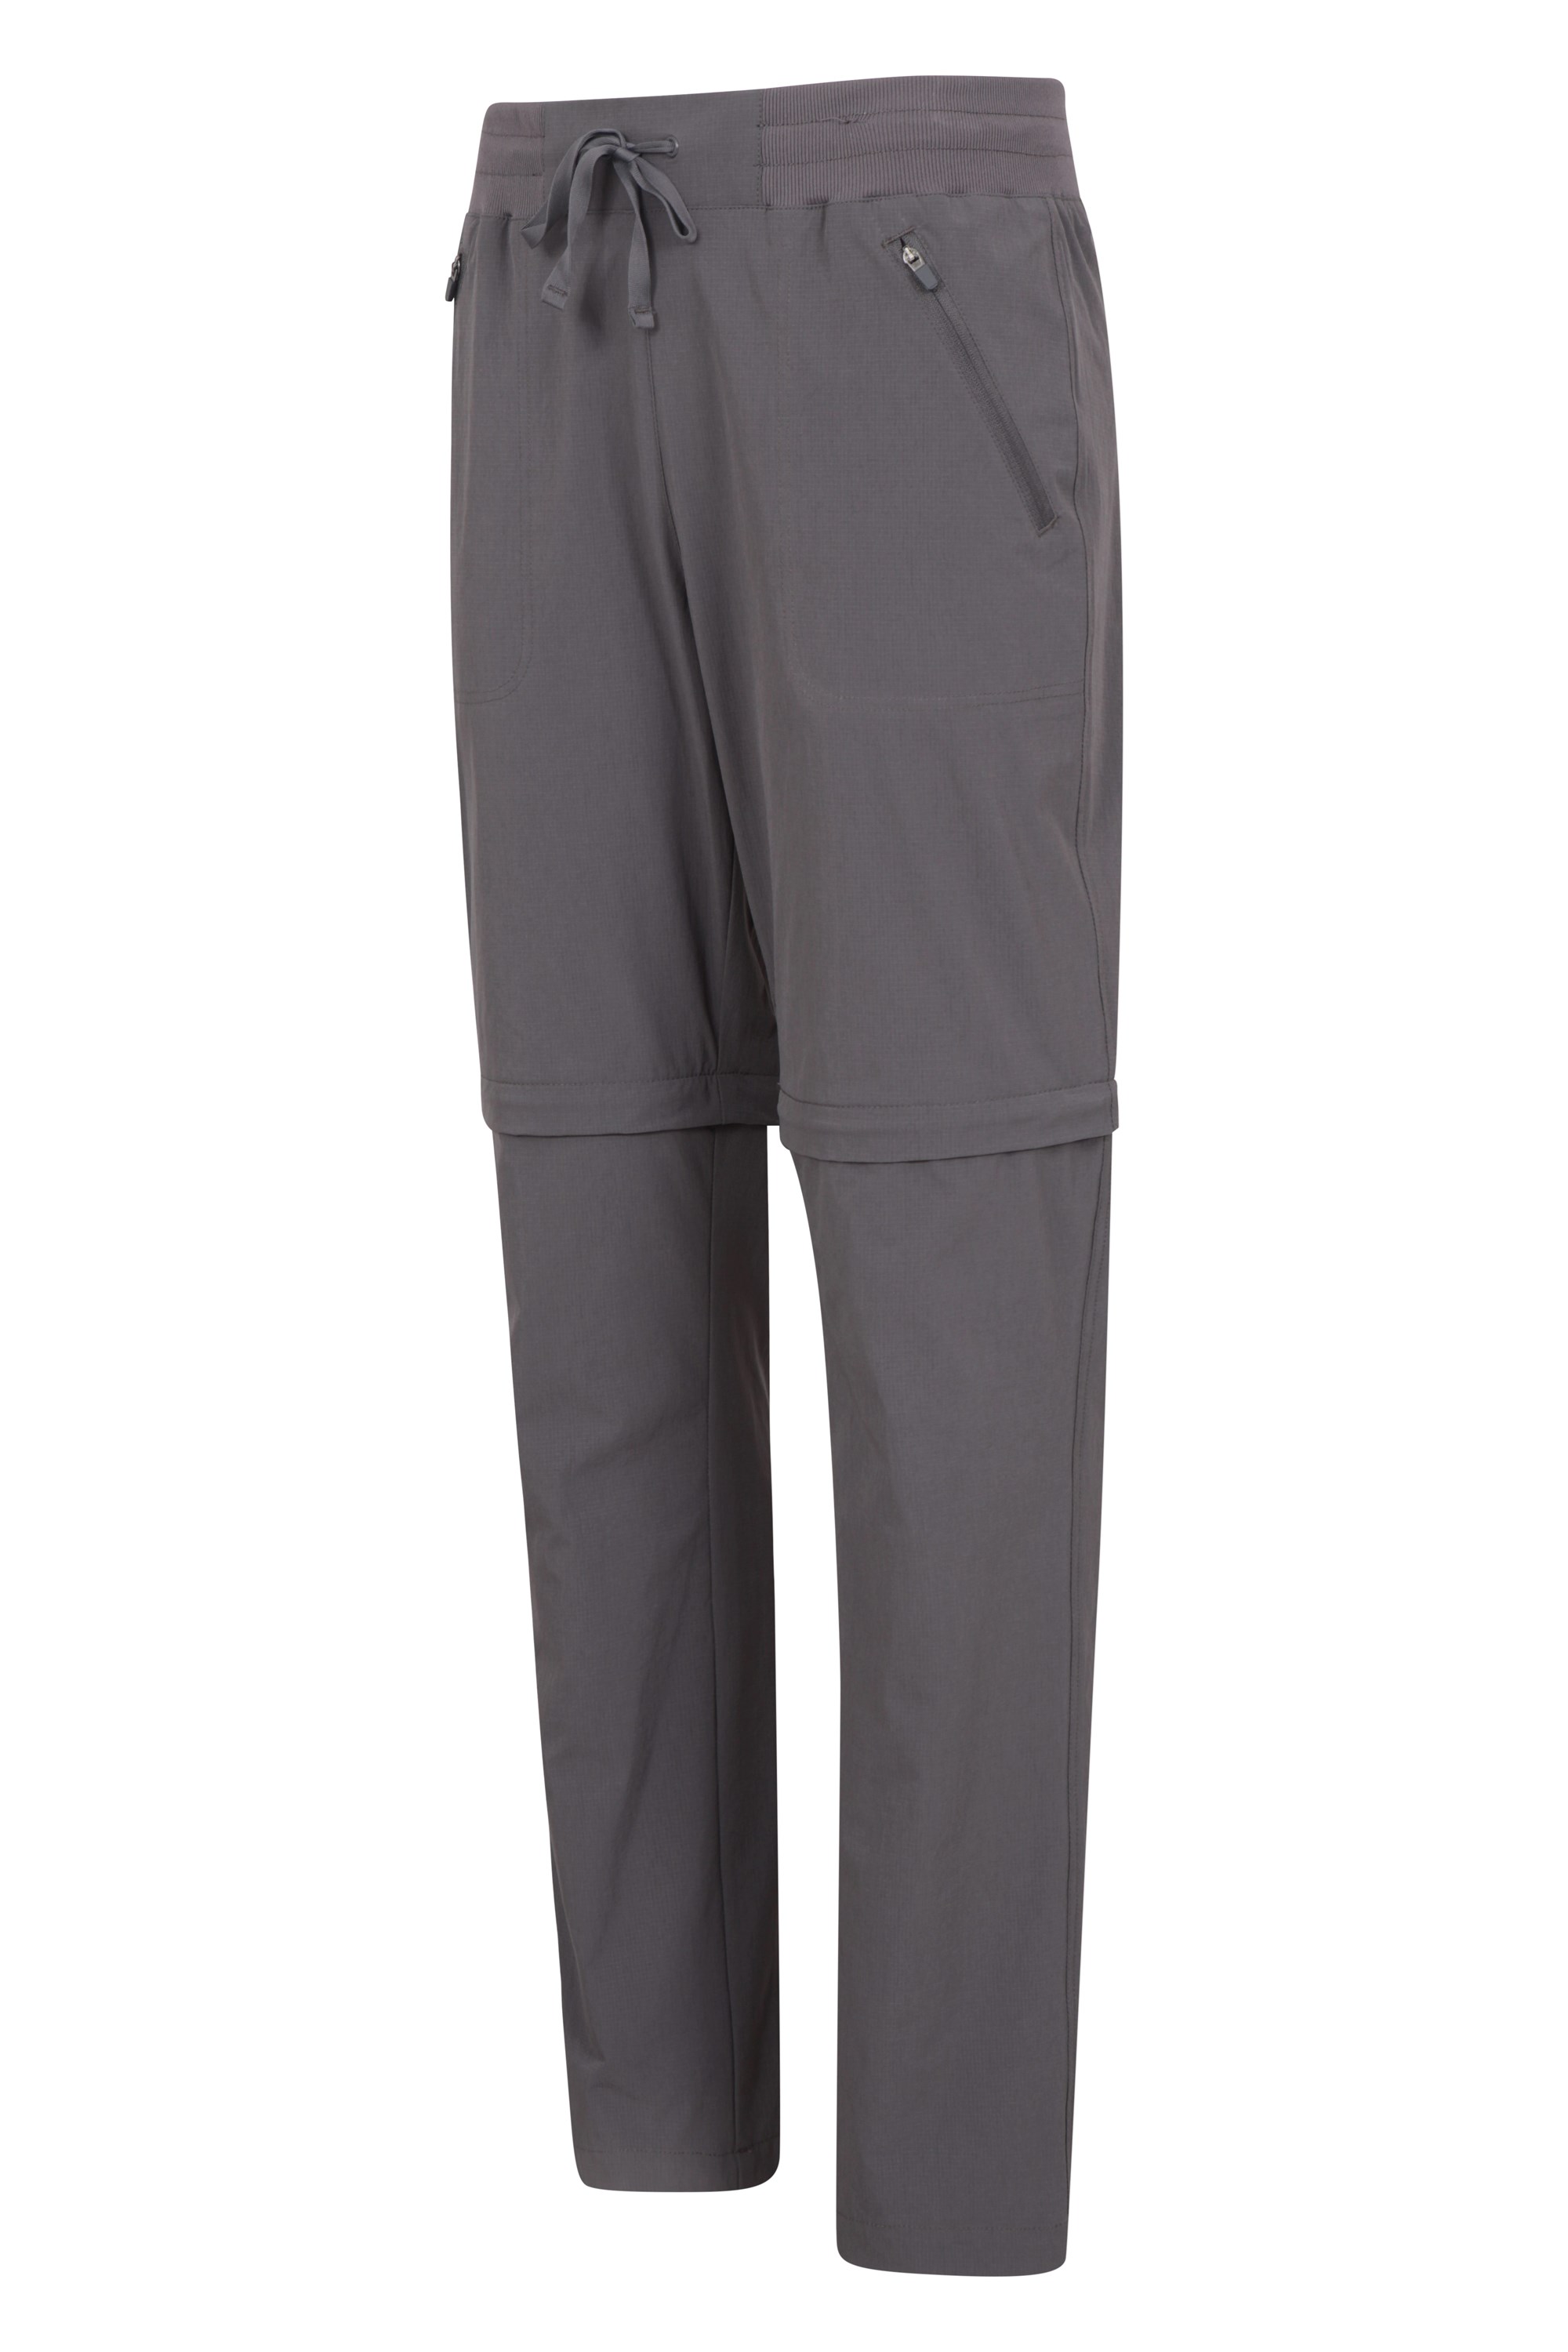 Mountain Warehouse Mountain Warehouse Kids Explorer Zip Off Trouser Cotton Elastic Breathable Pants 